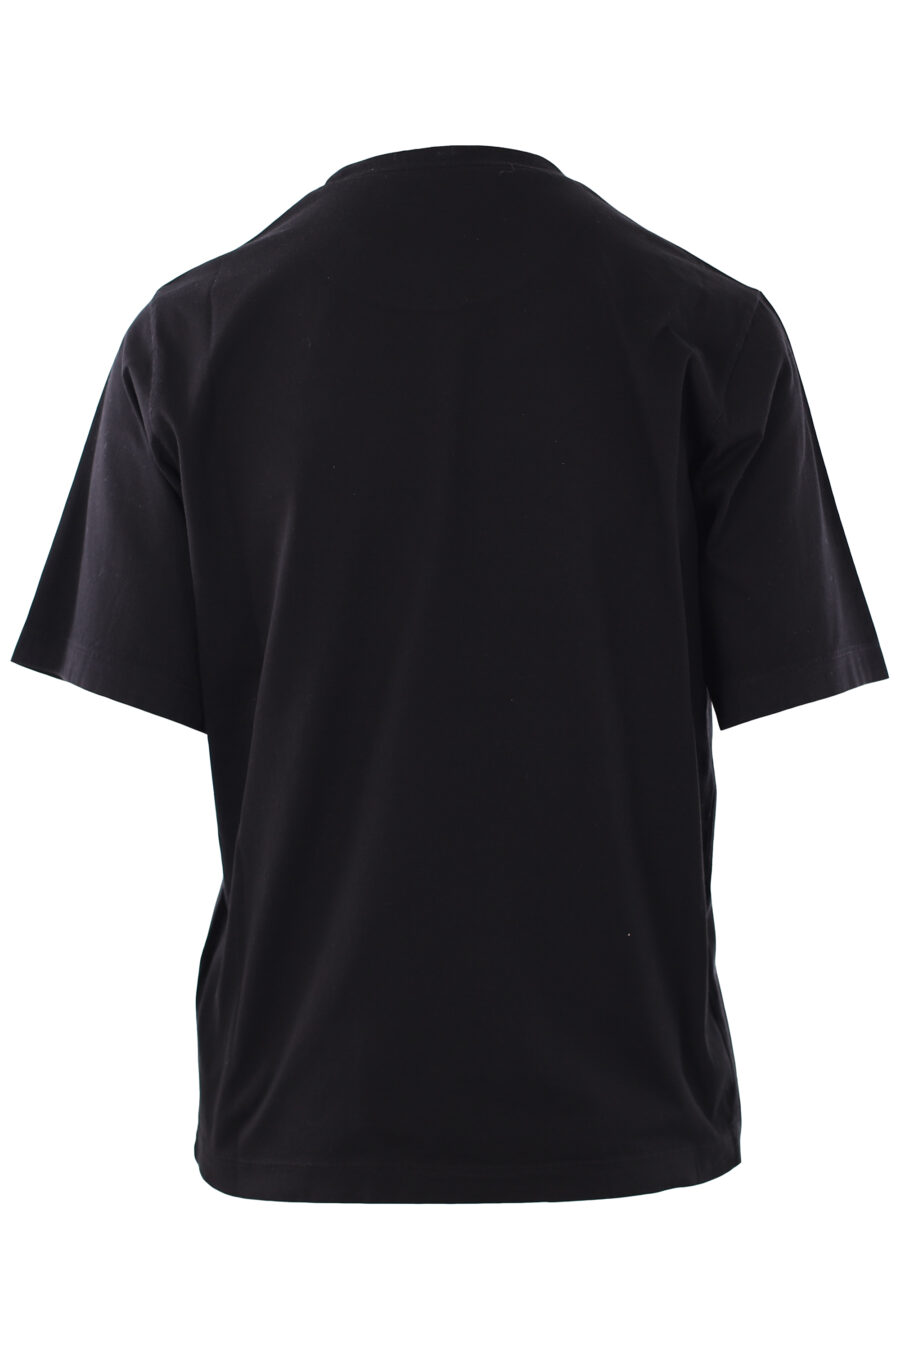 Camiseta negra con logo blanco - IMG 0274